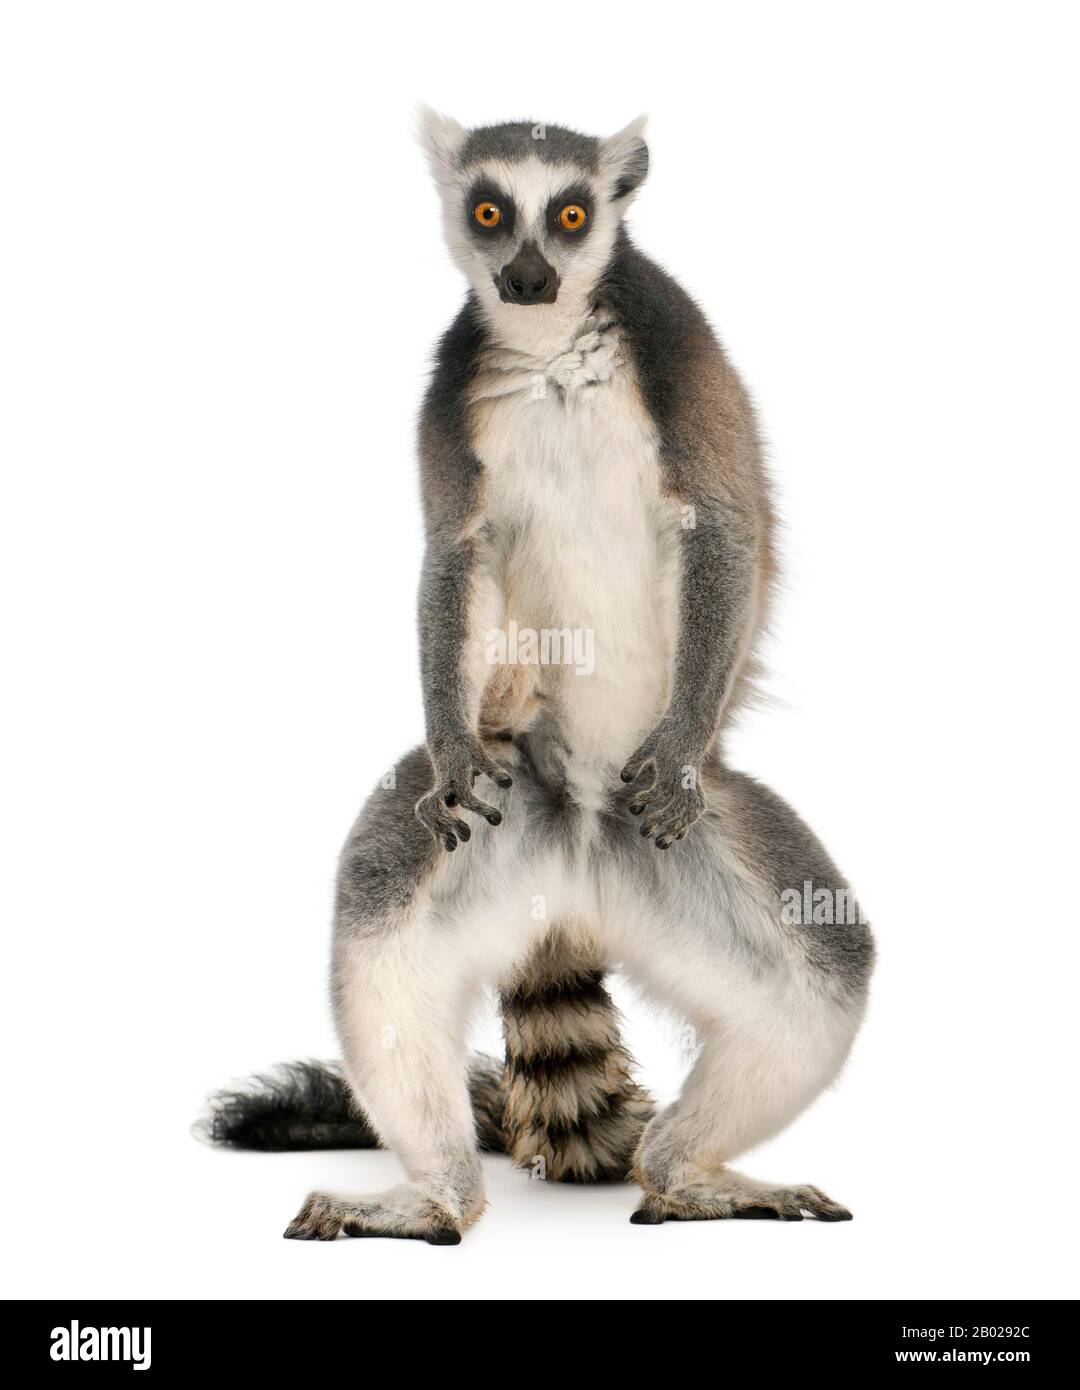 Original: “Catta” (Ring-Tailed Lemur) – Noelle M. Brooks